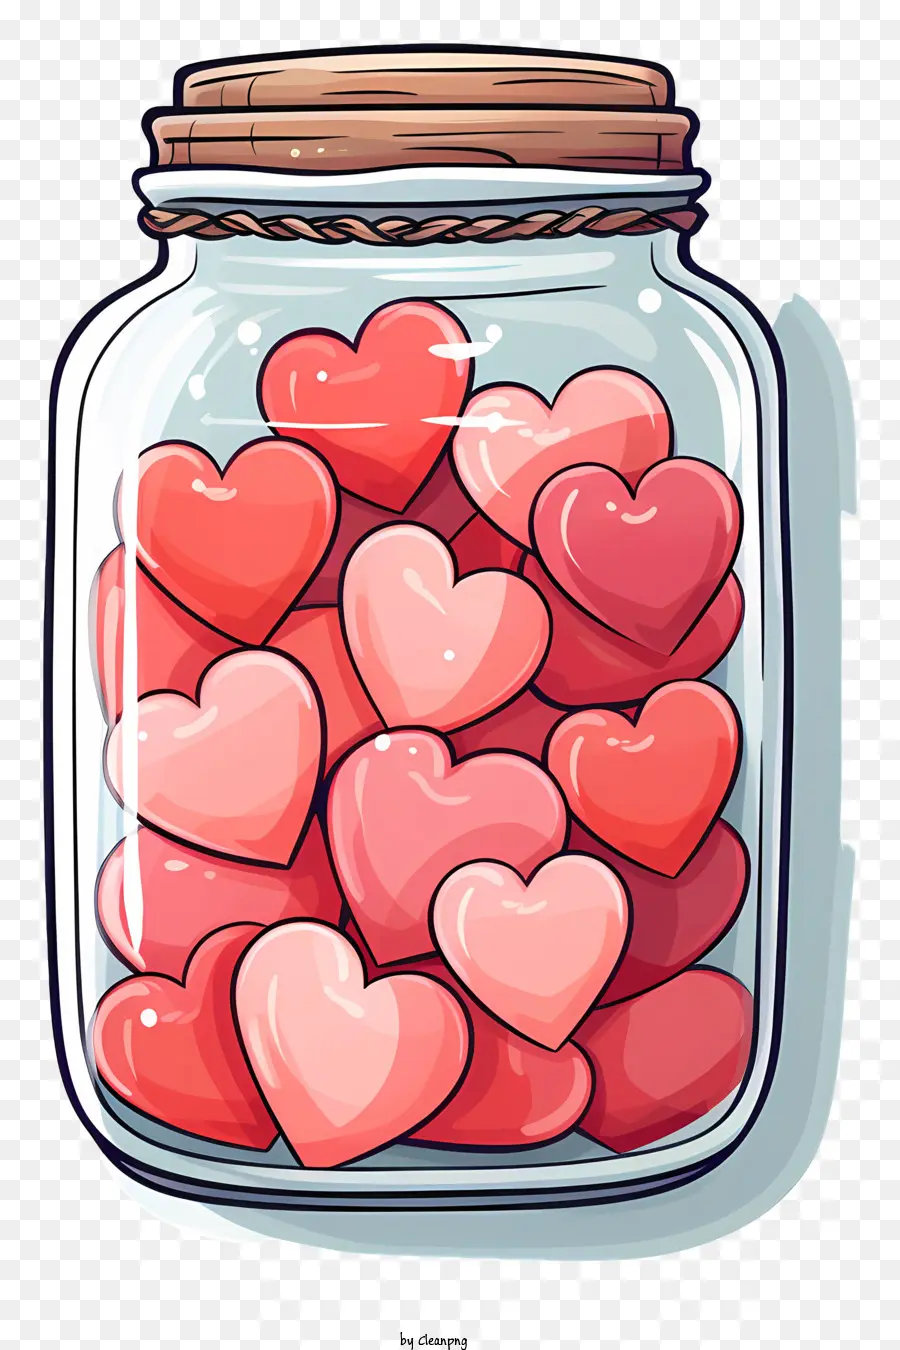 mason jar glass jar heart shaped candies wooden handle pink candies